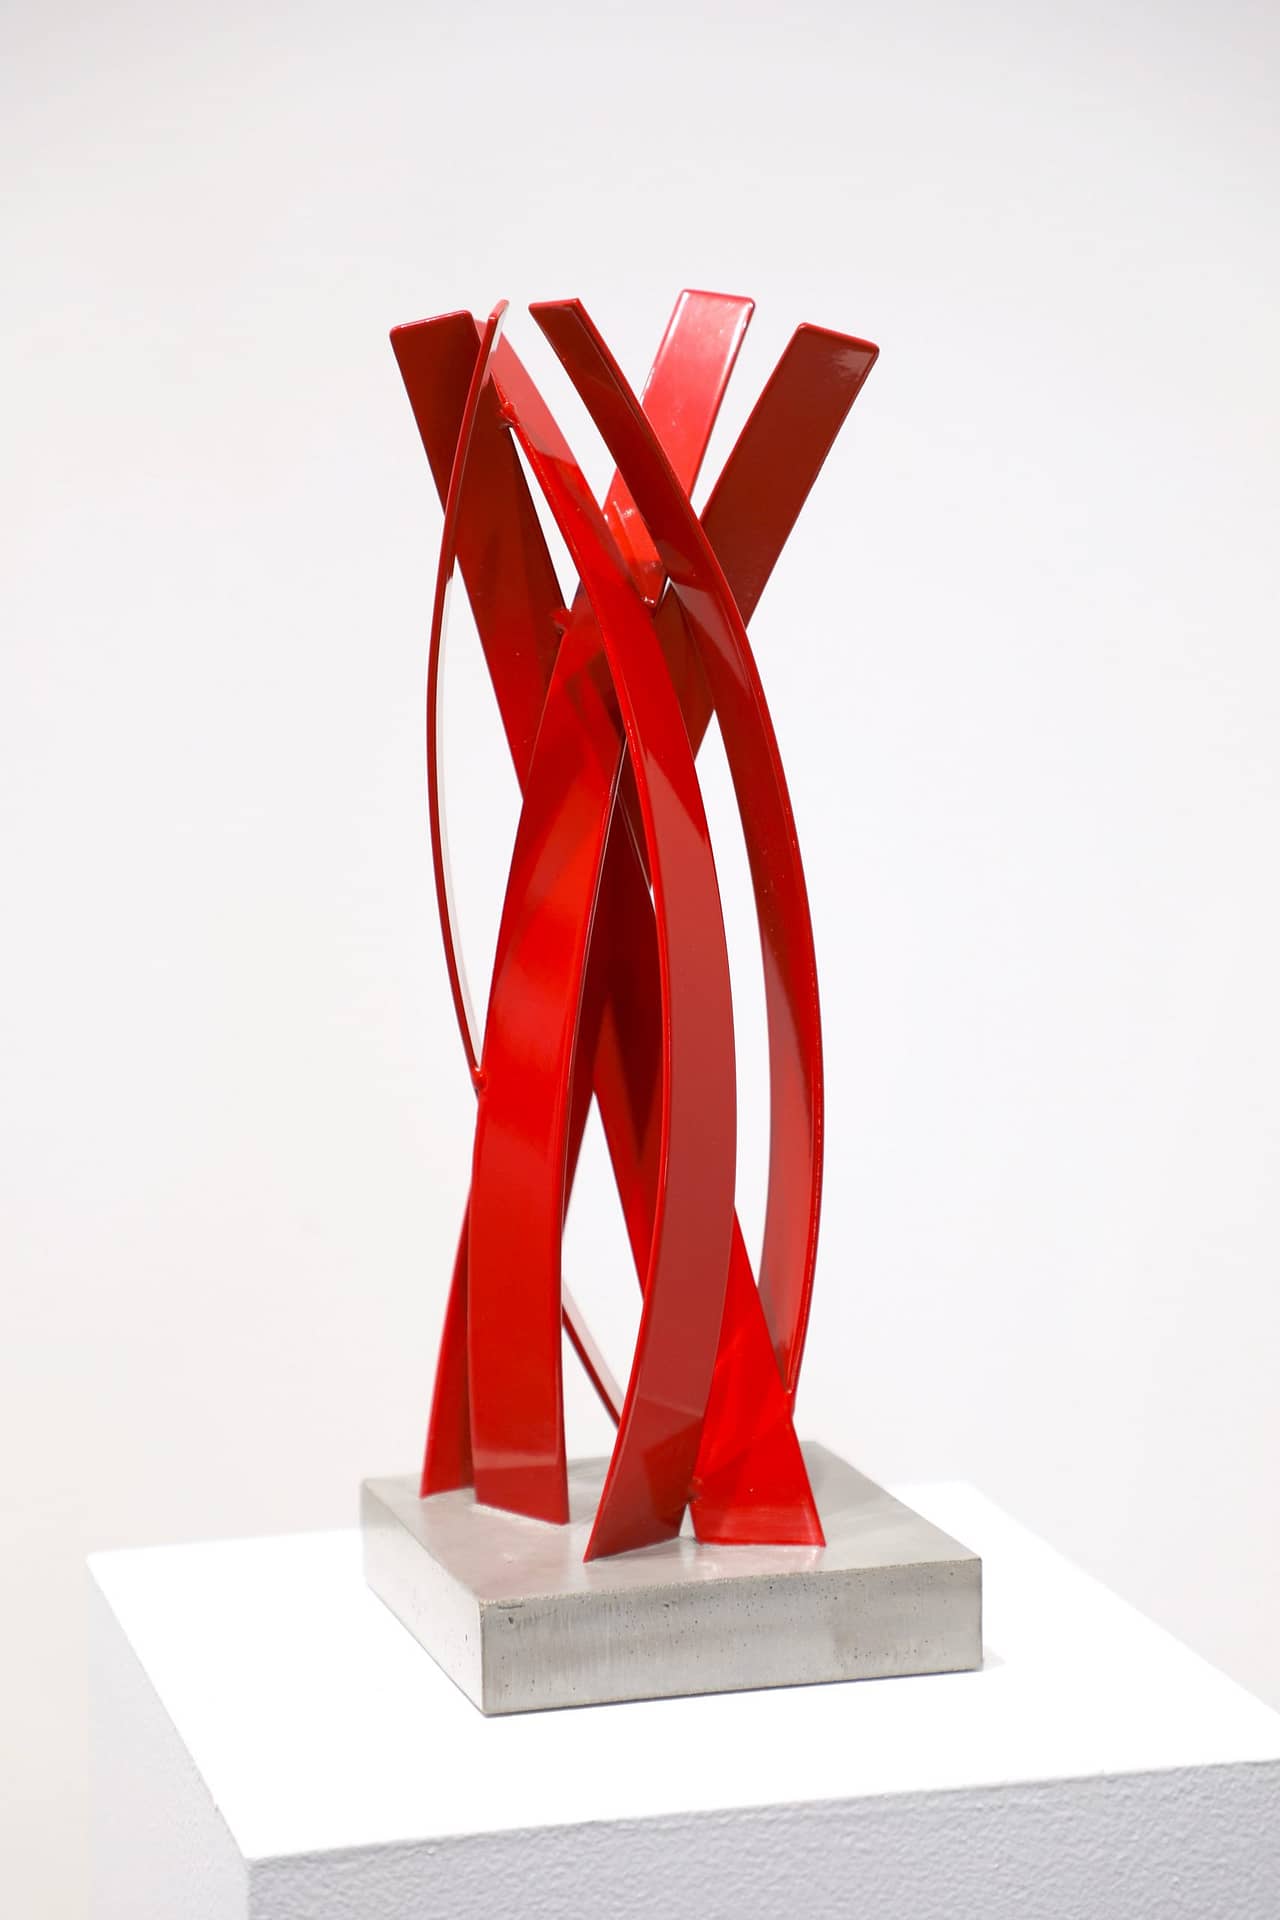 matt devine, sculpture, study, steel with powdercoat, red sculpture, abstract sculpture